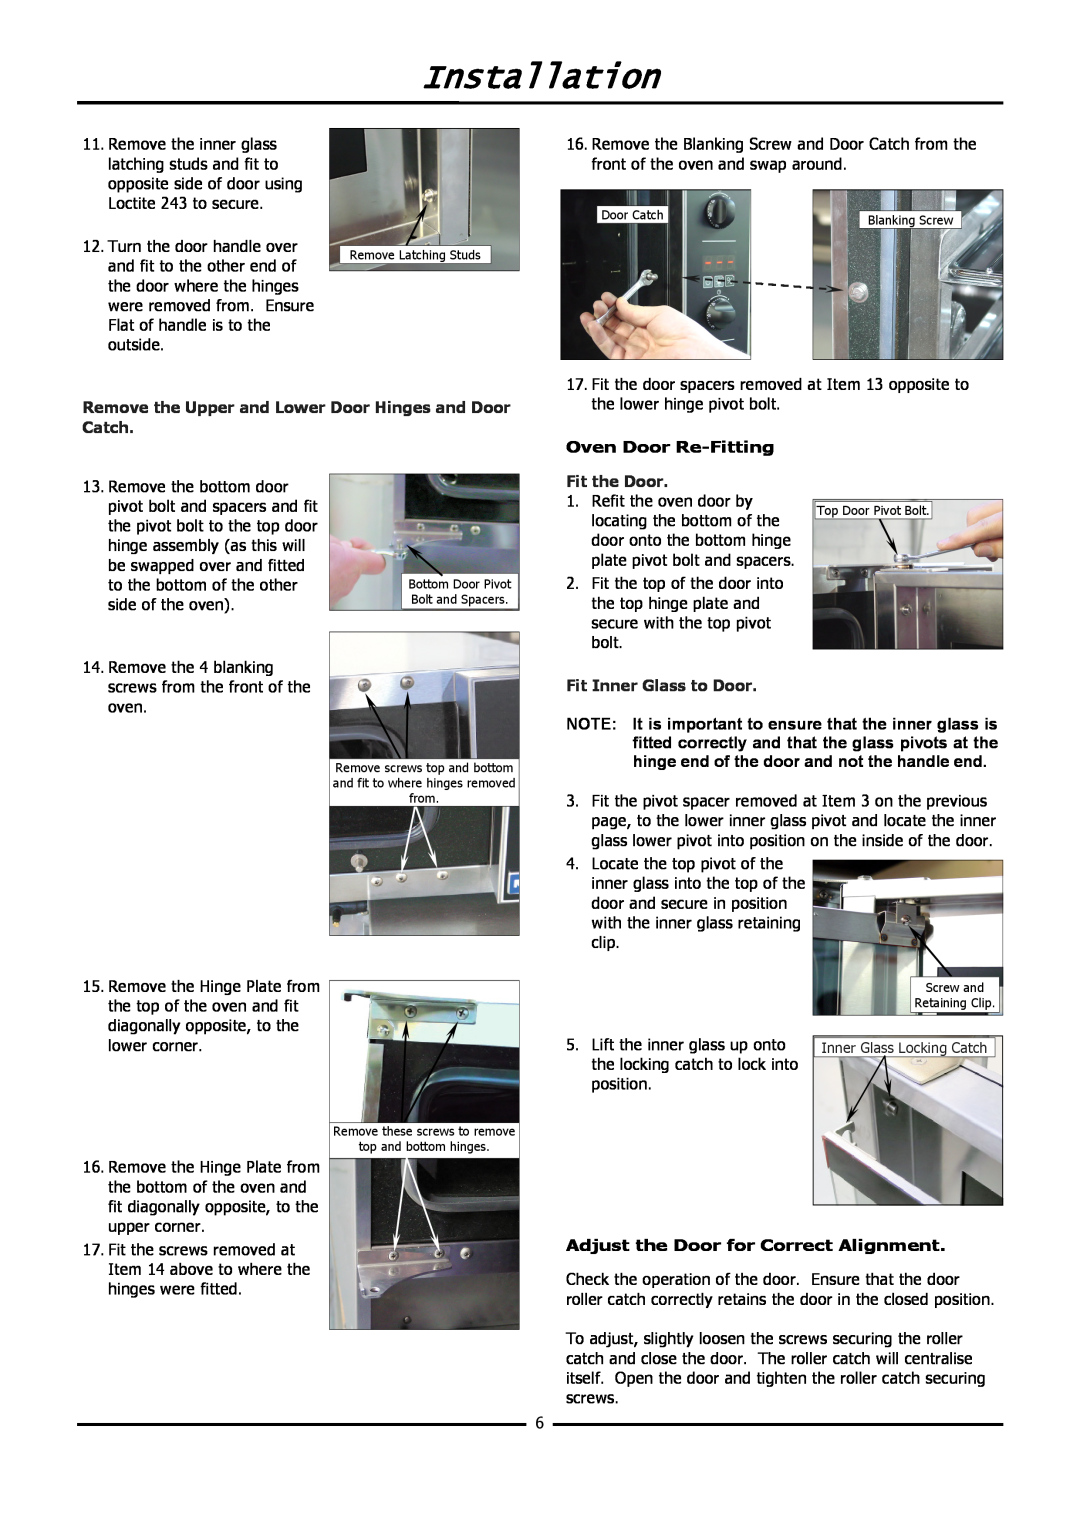 Moffat E31D4 operation manual Fit the Door, Fit Inner Glass to Door, Installation, Oven Door Re-Fitting 